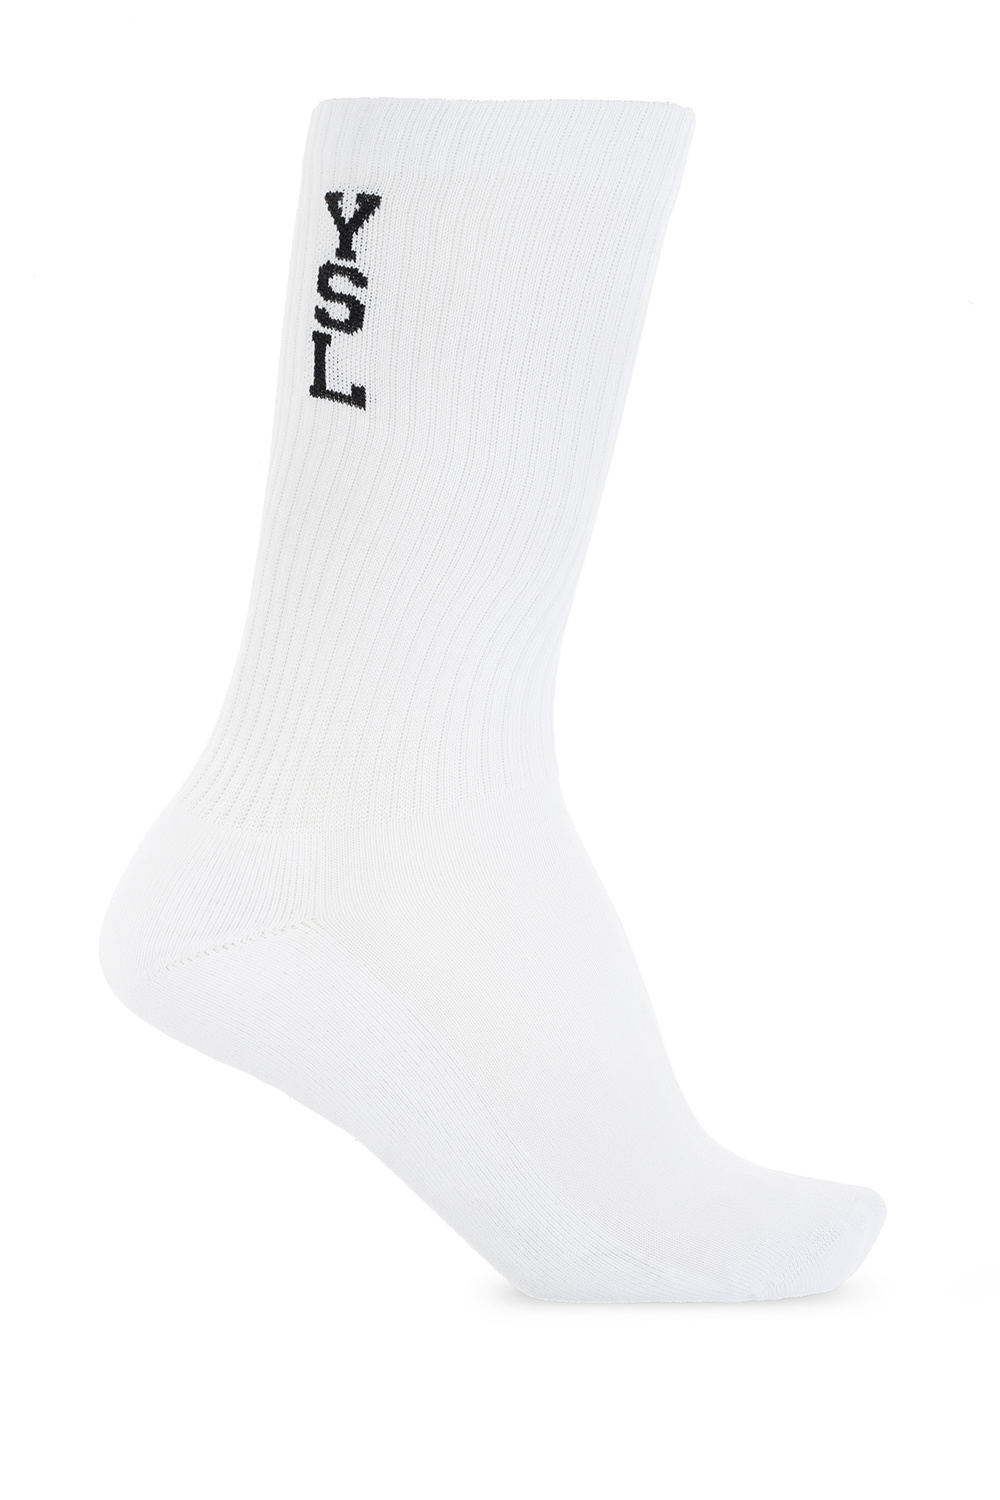 Saint Laurent Socks with logo